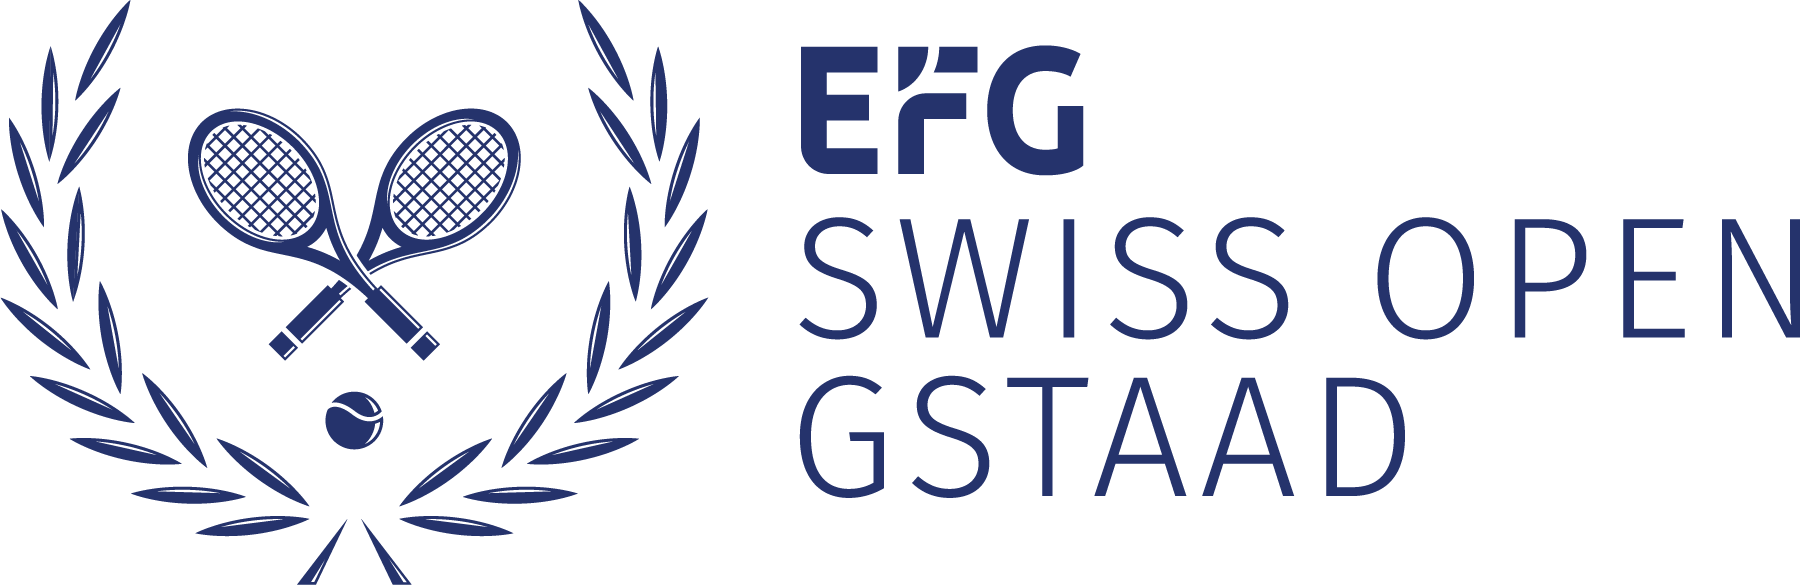 EFG est le nouveau partenaire du Swiss Open Gstaad Swiss Open Gstaad